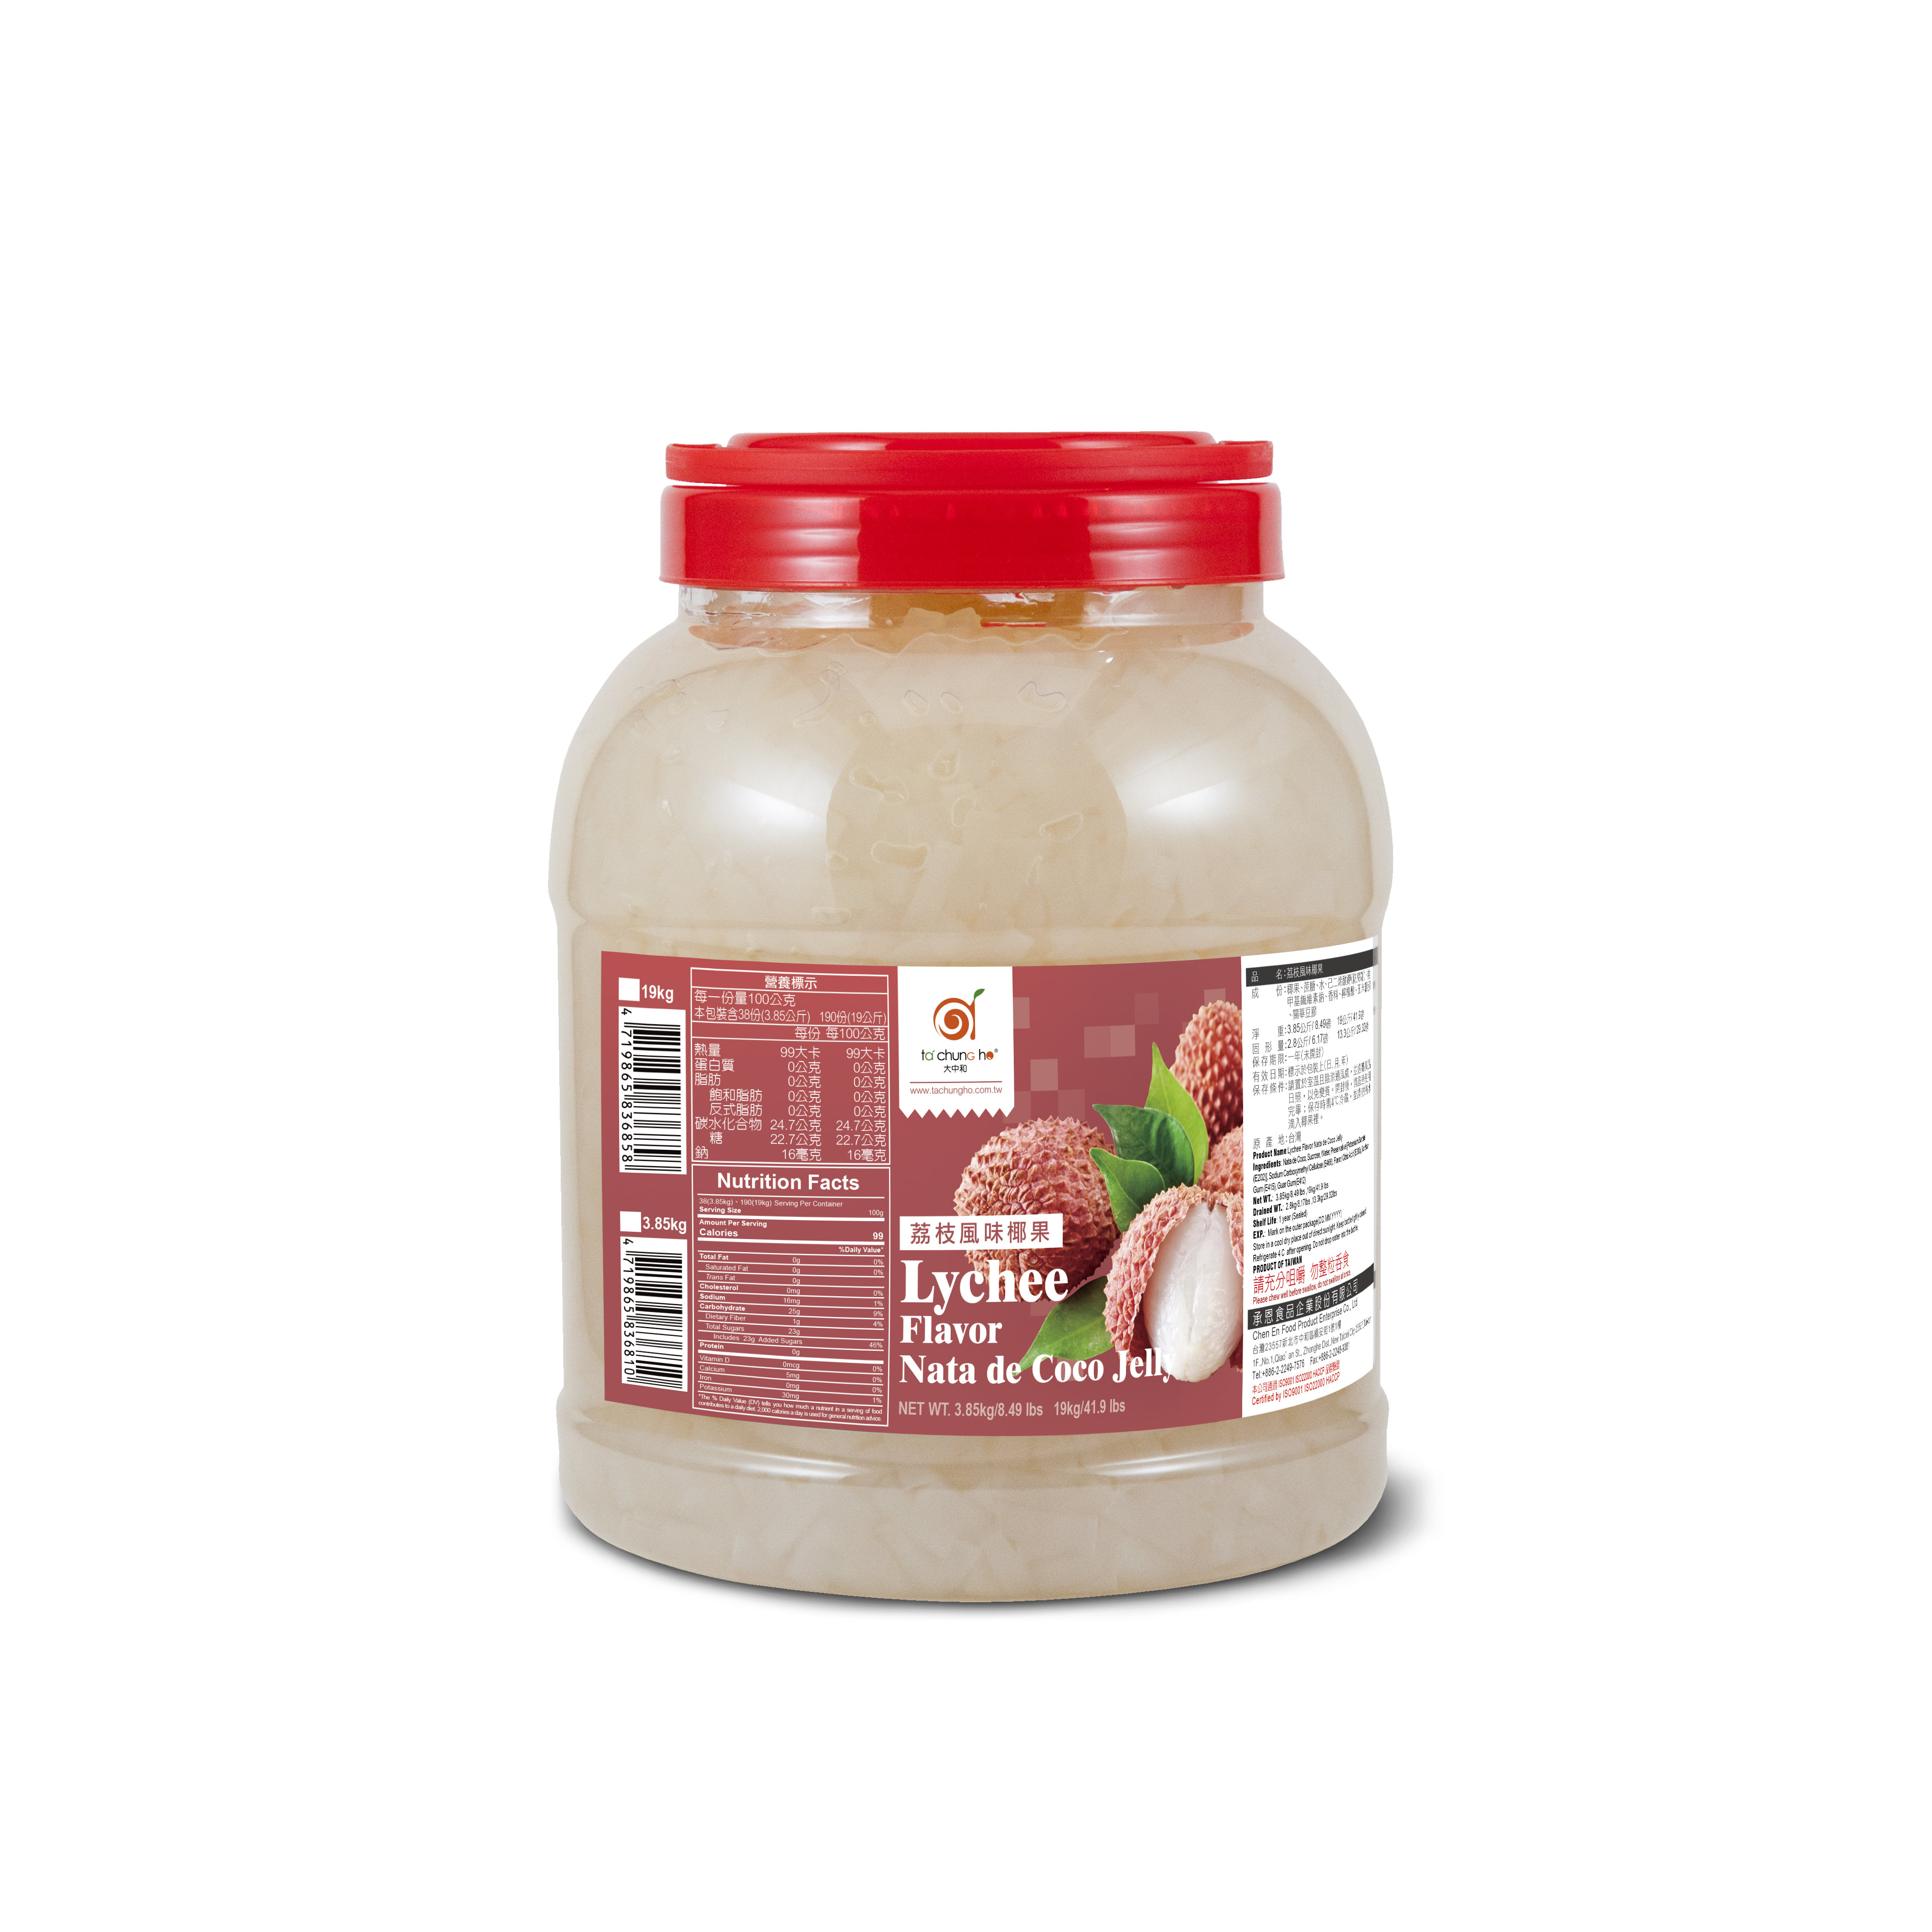 Lychee Flavor Nata de Coco Jelly Package (export) 